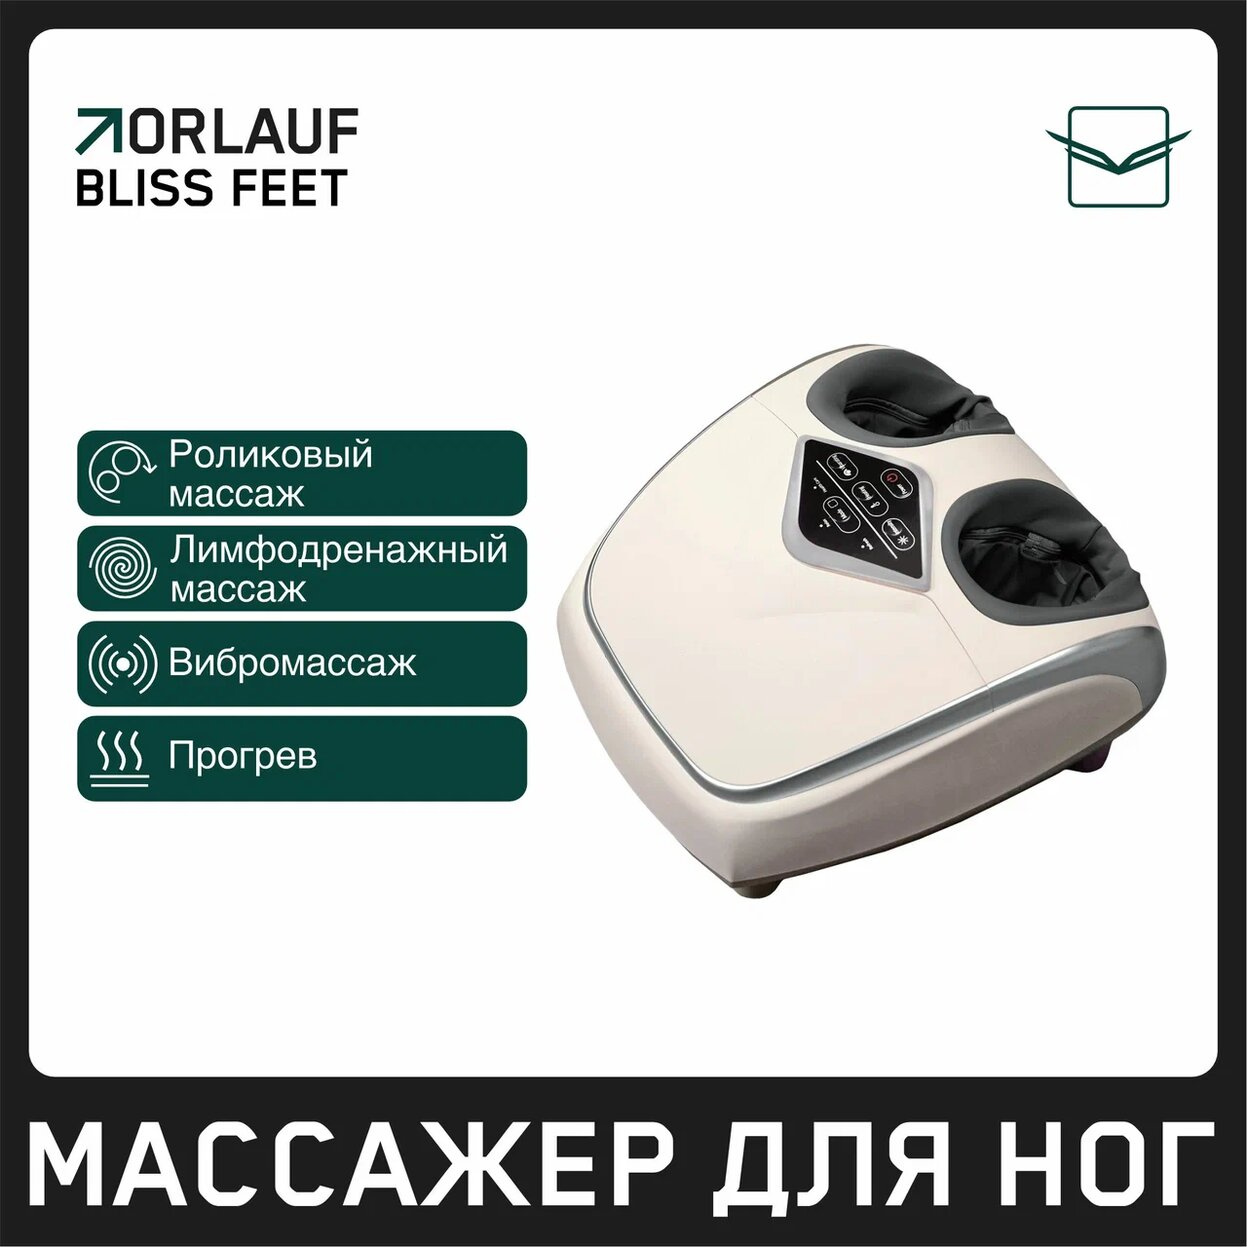 Orlauf Bliss Feet из каталога массажеров в Нижнем Новгороде по цене 27600 ₽